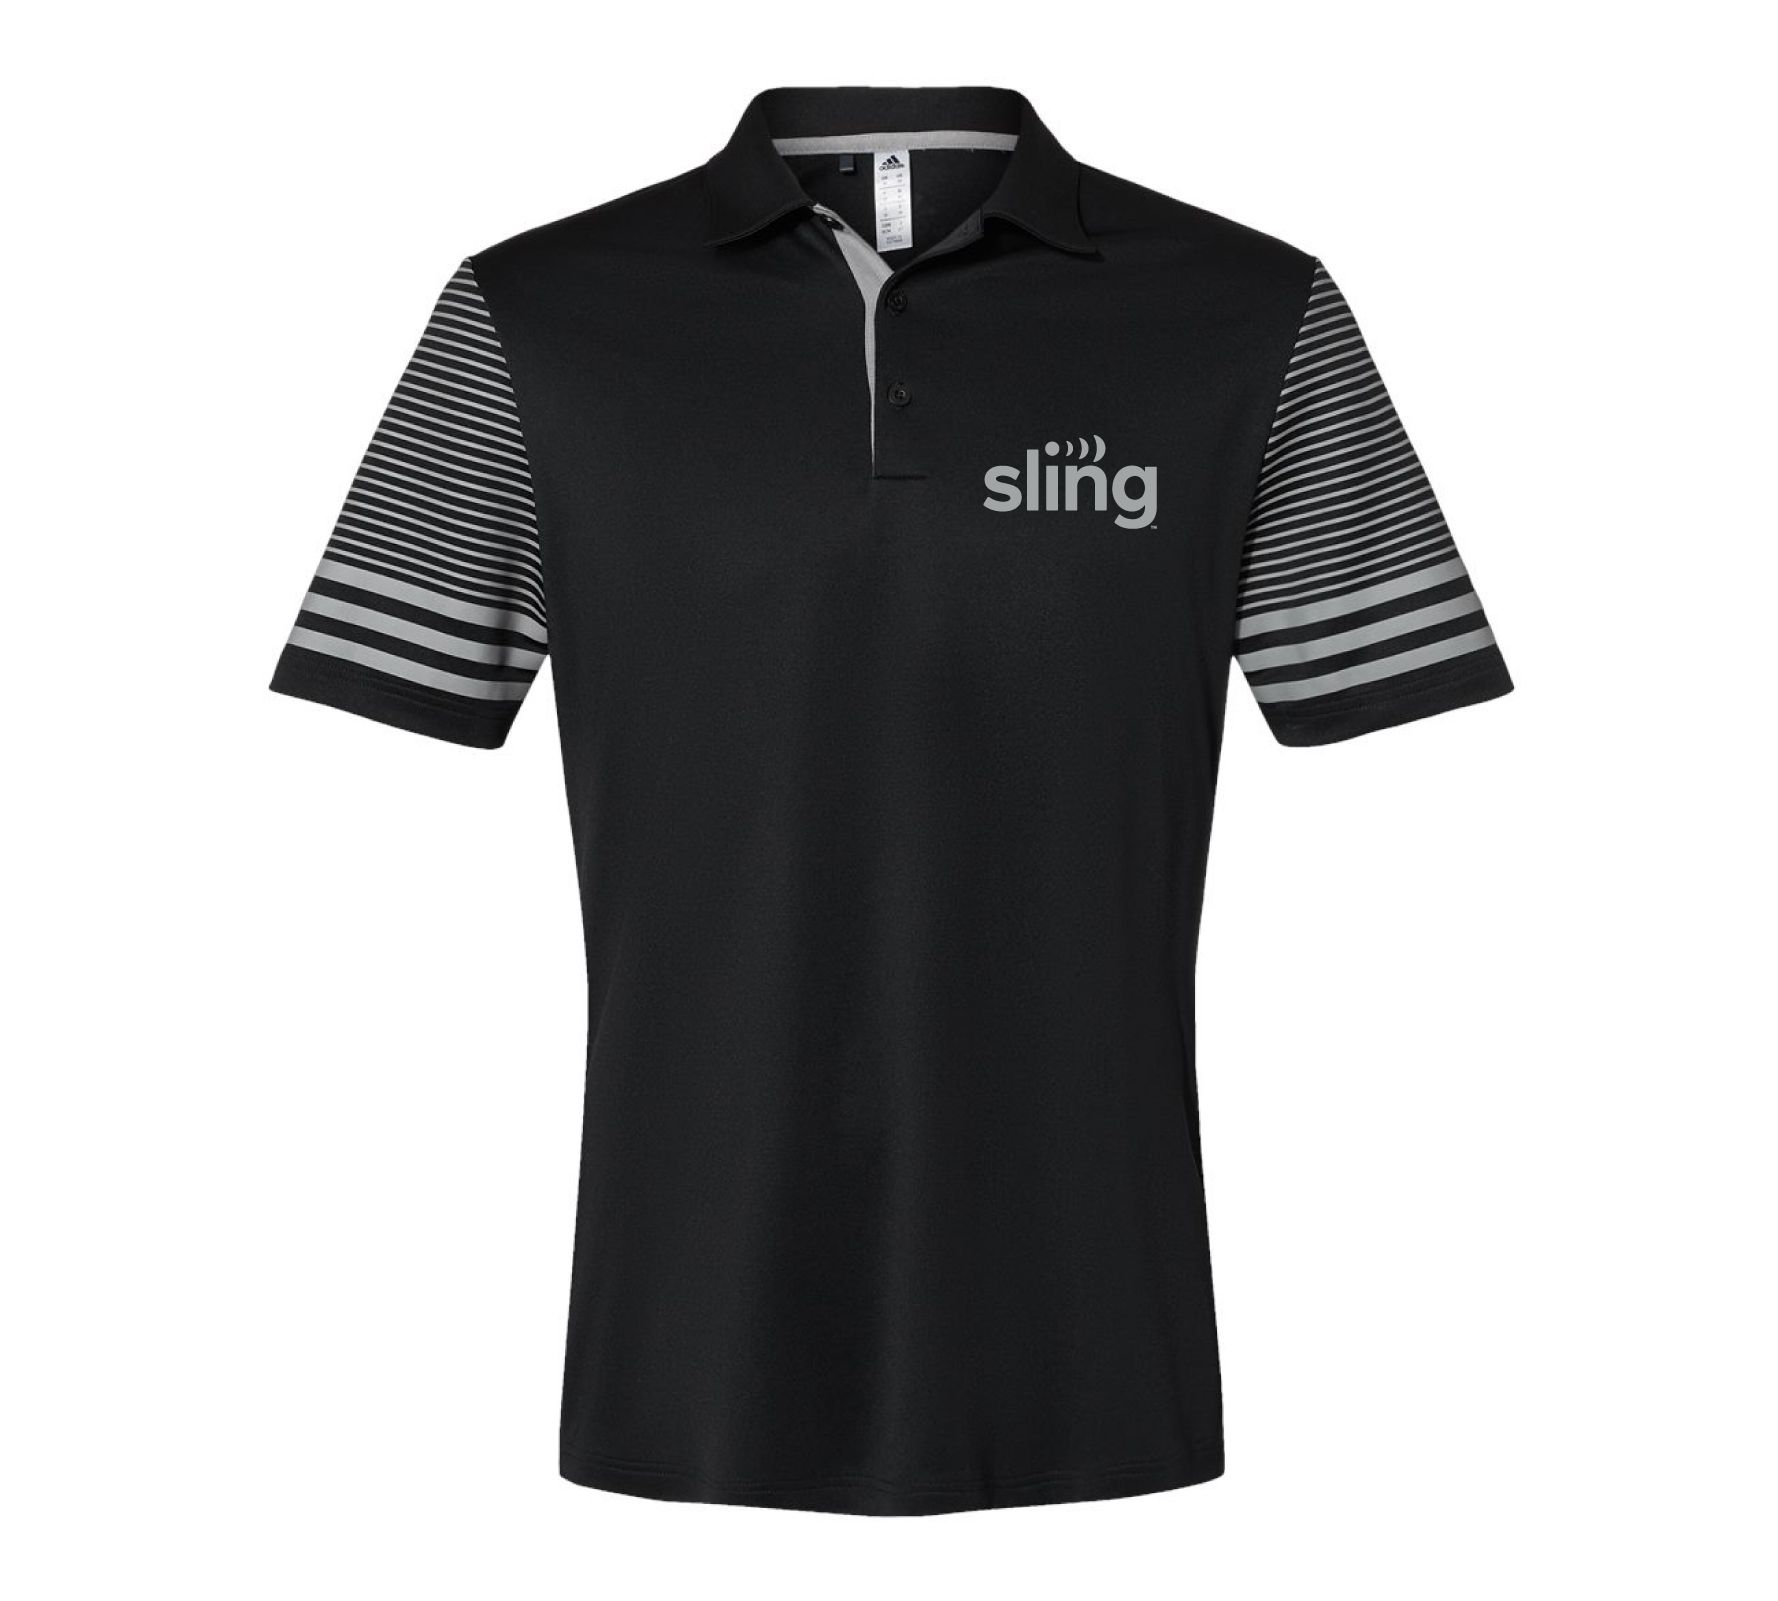 Adidas Striped Sport Shirt with Sling Logo